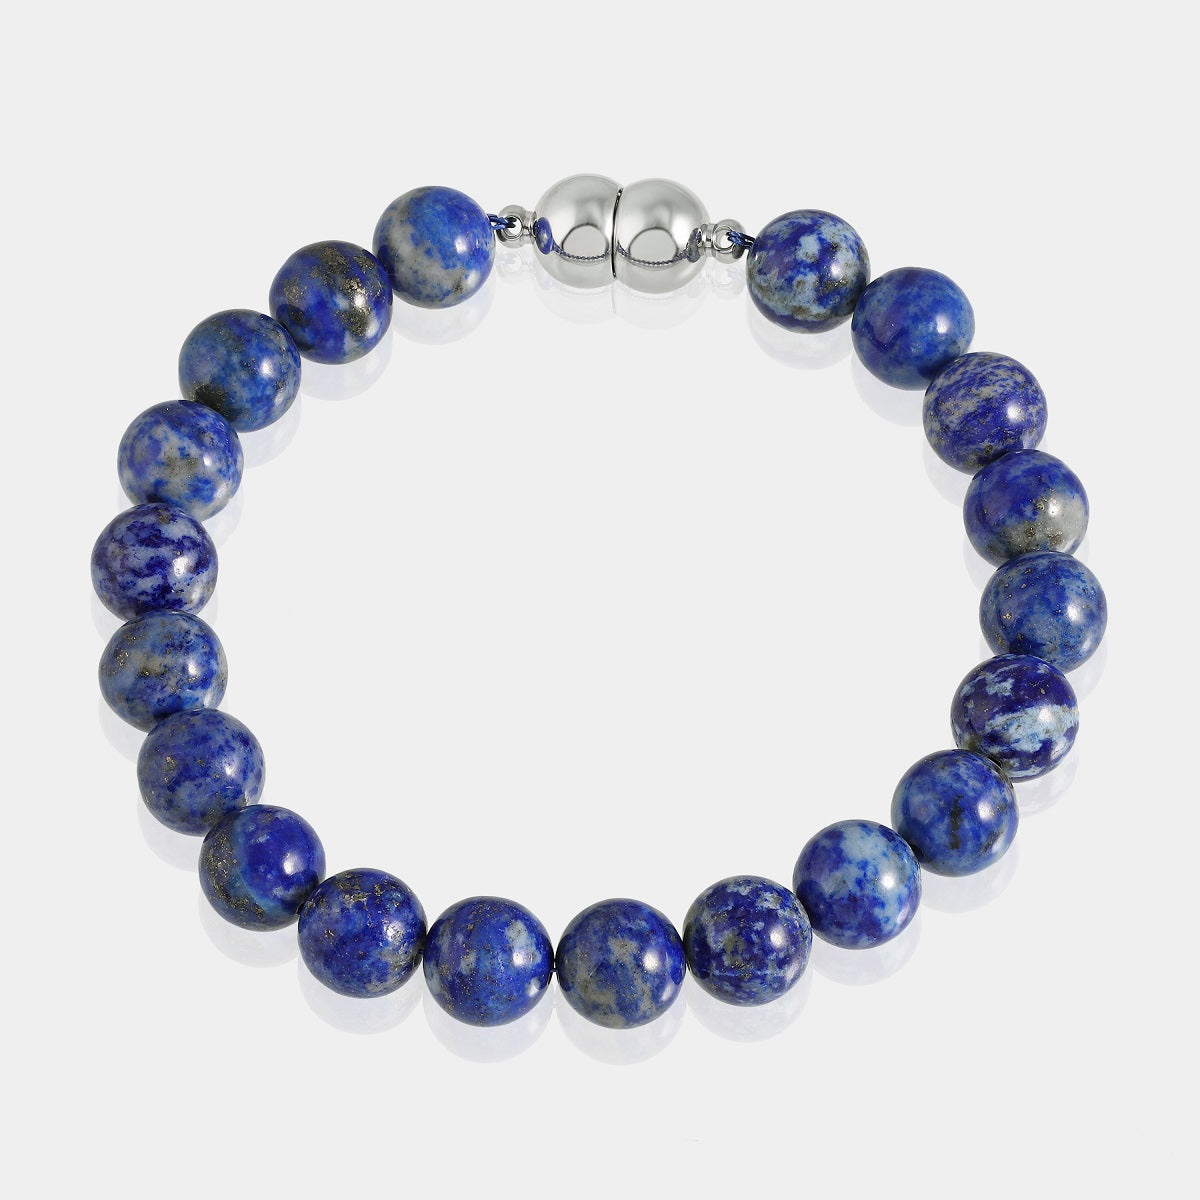 A detailed shot of the magnetic lock mechanism on the lapis lazuli gemstone bracelet, highlighting its functionality and stylish design.